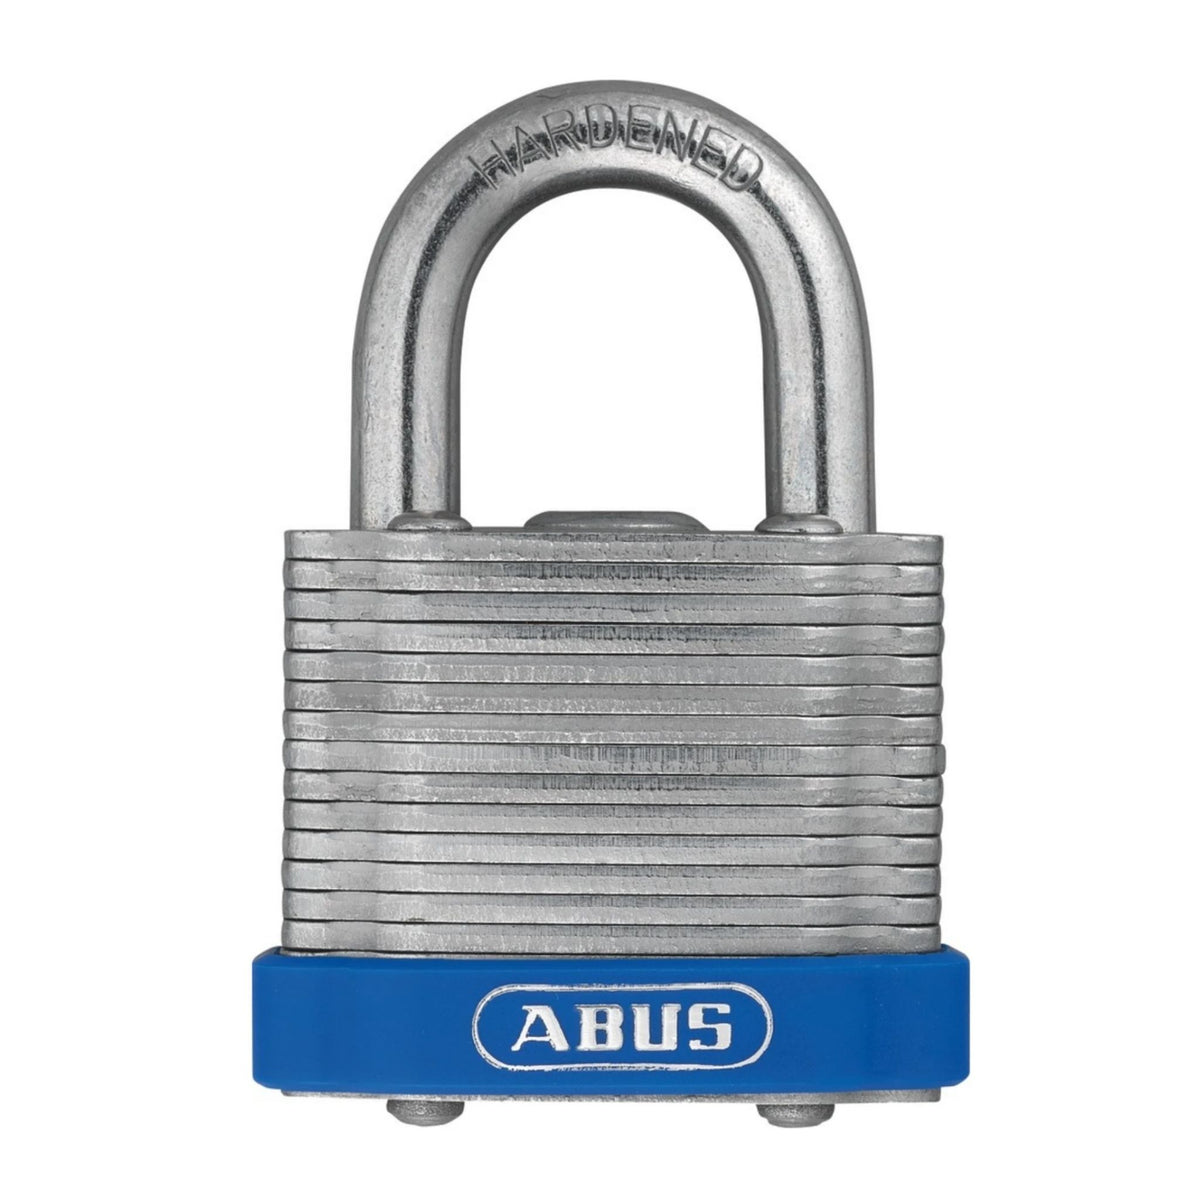 Abus 41/40 KA EE 0118 Laminated Steel Padlock with Blue Bumper Keyed Alike to Match Existing Key Number KA EE0118 - The Lock Source